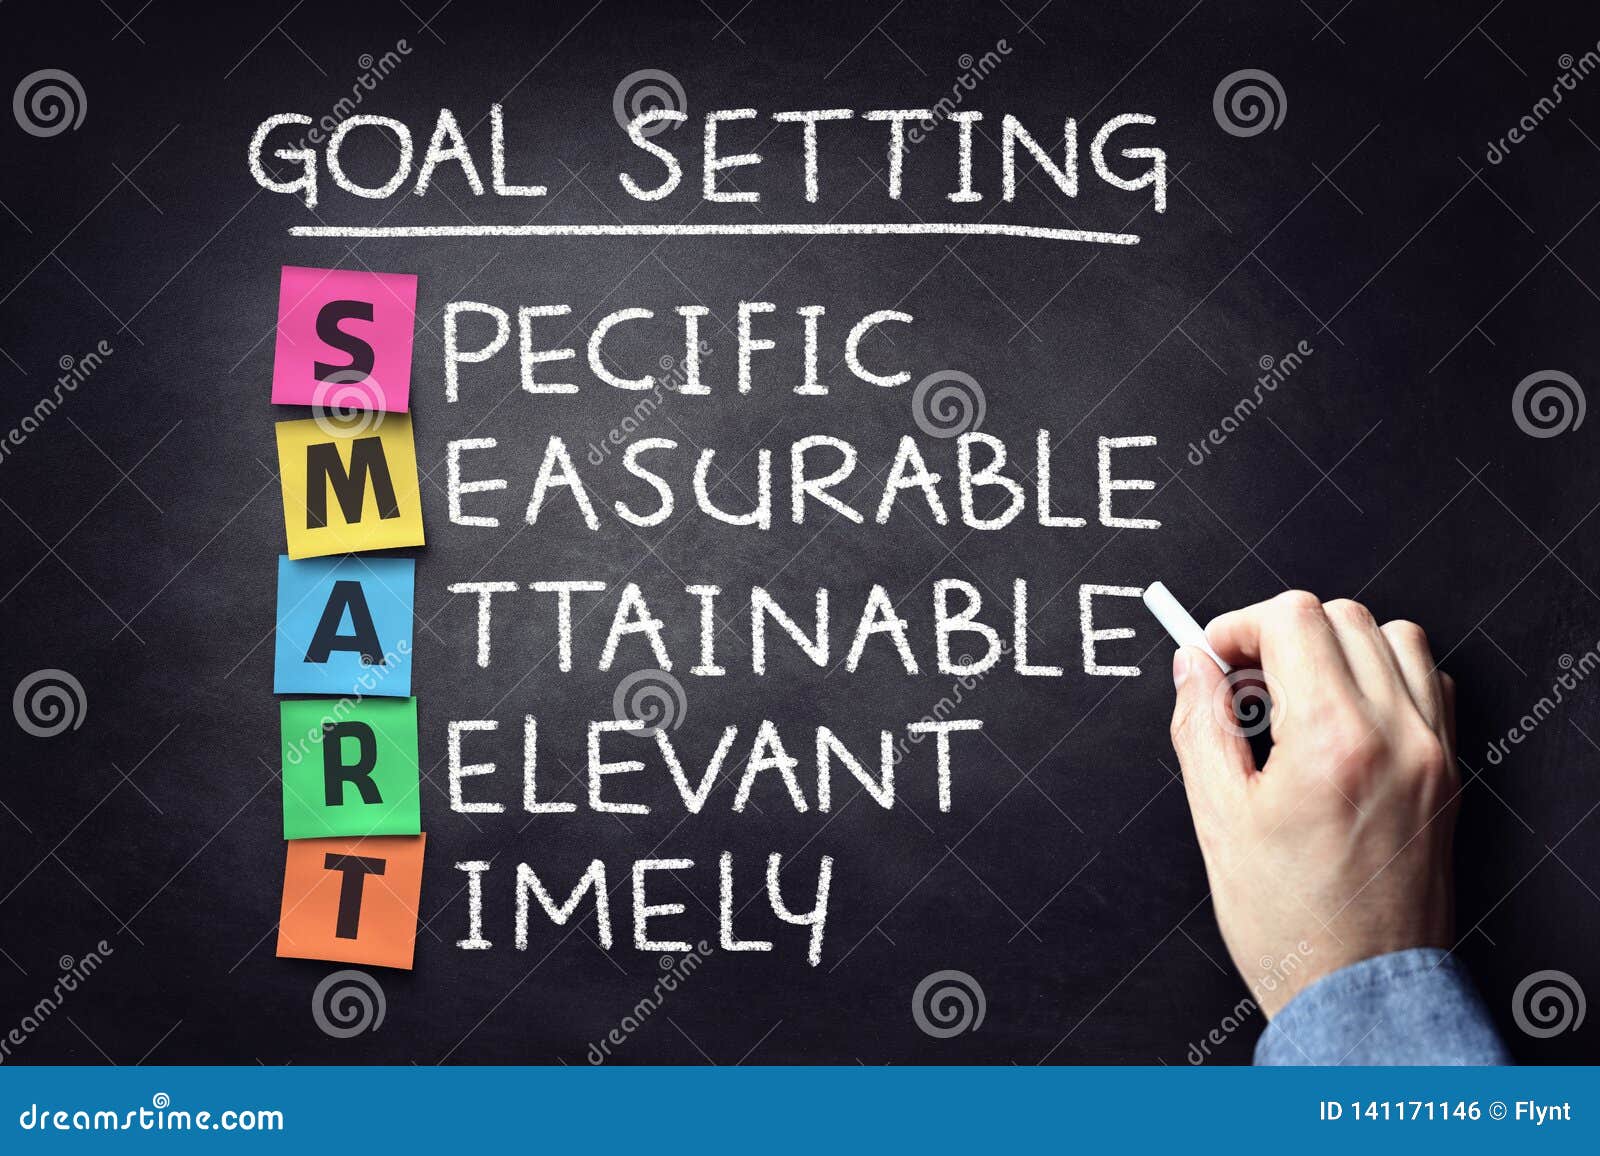 smart business goal setting concept